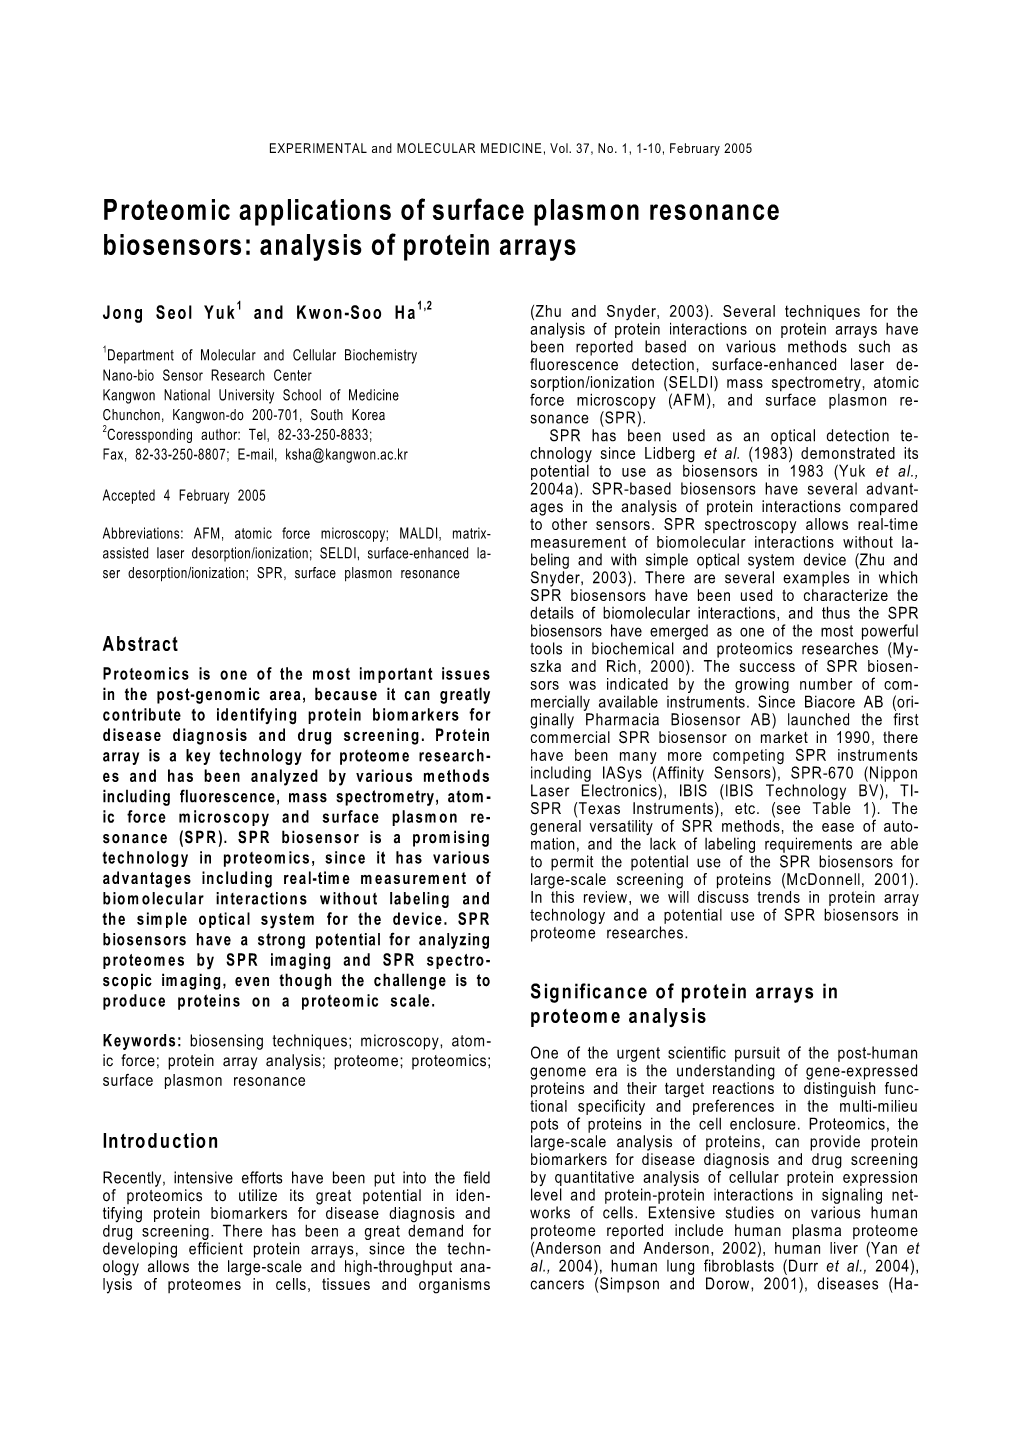 Proteomic Applications of Surface Plasmon Resonance Biosensors: Analysis of Protein Arrays